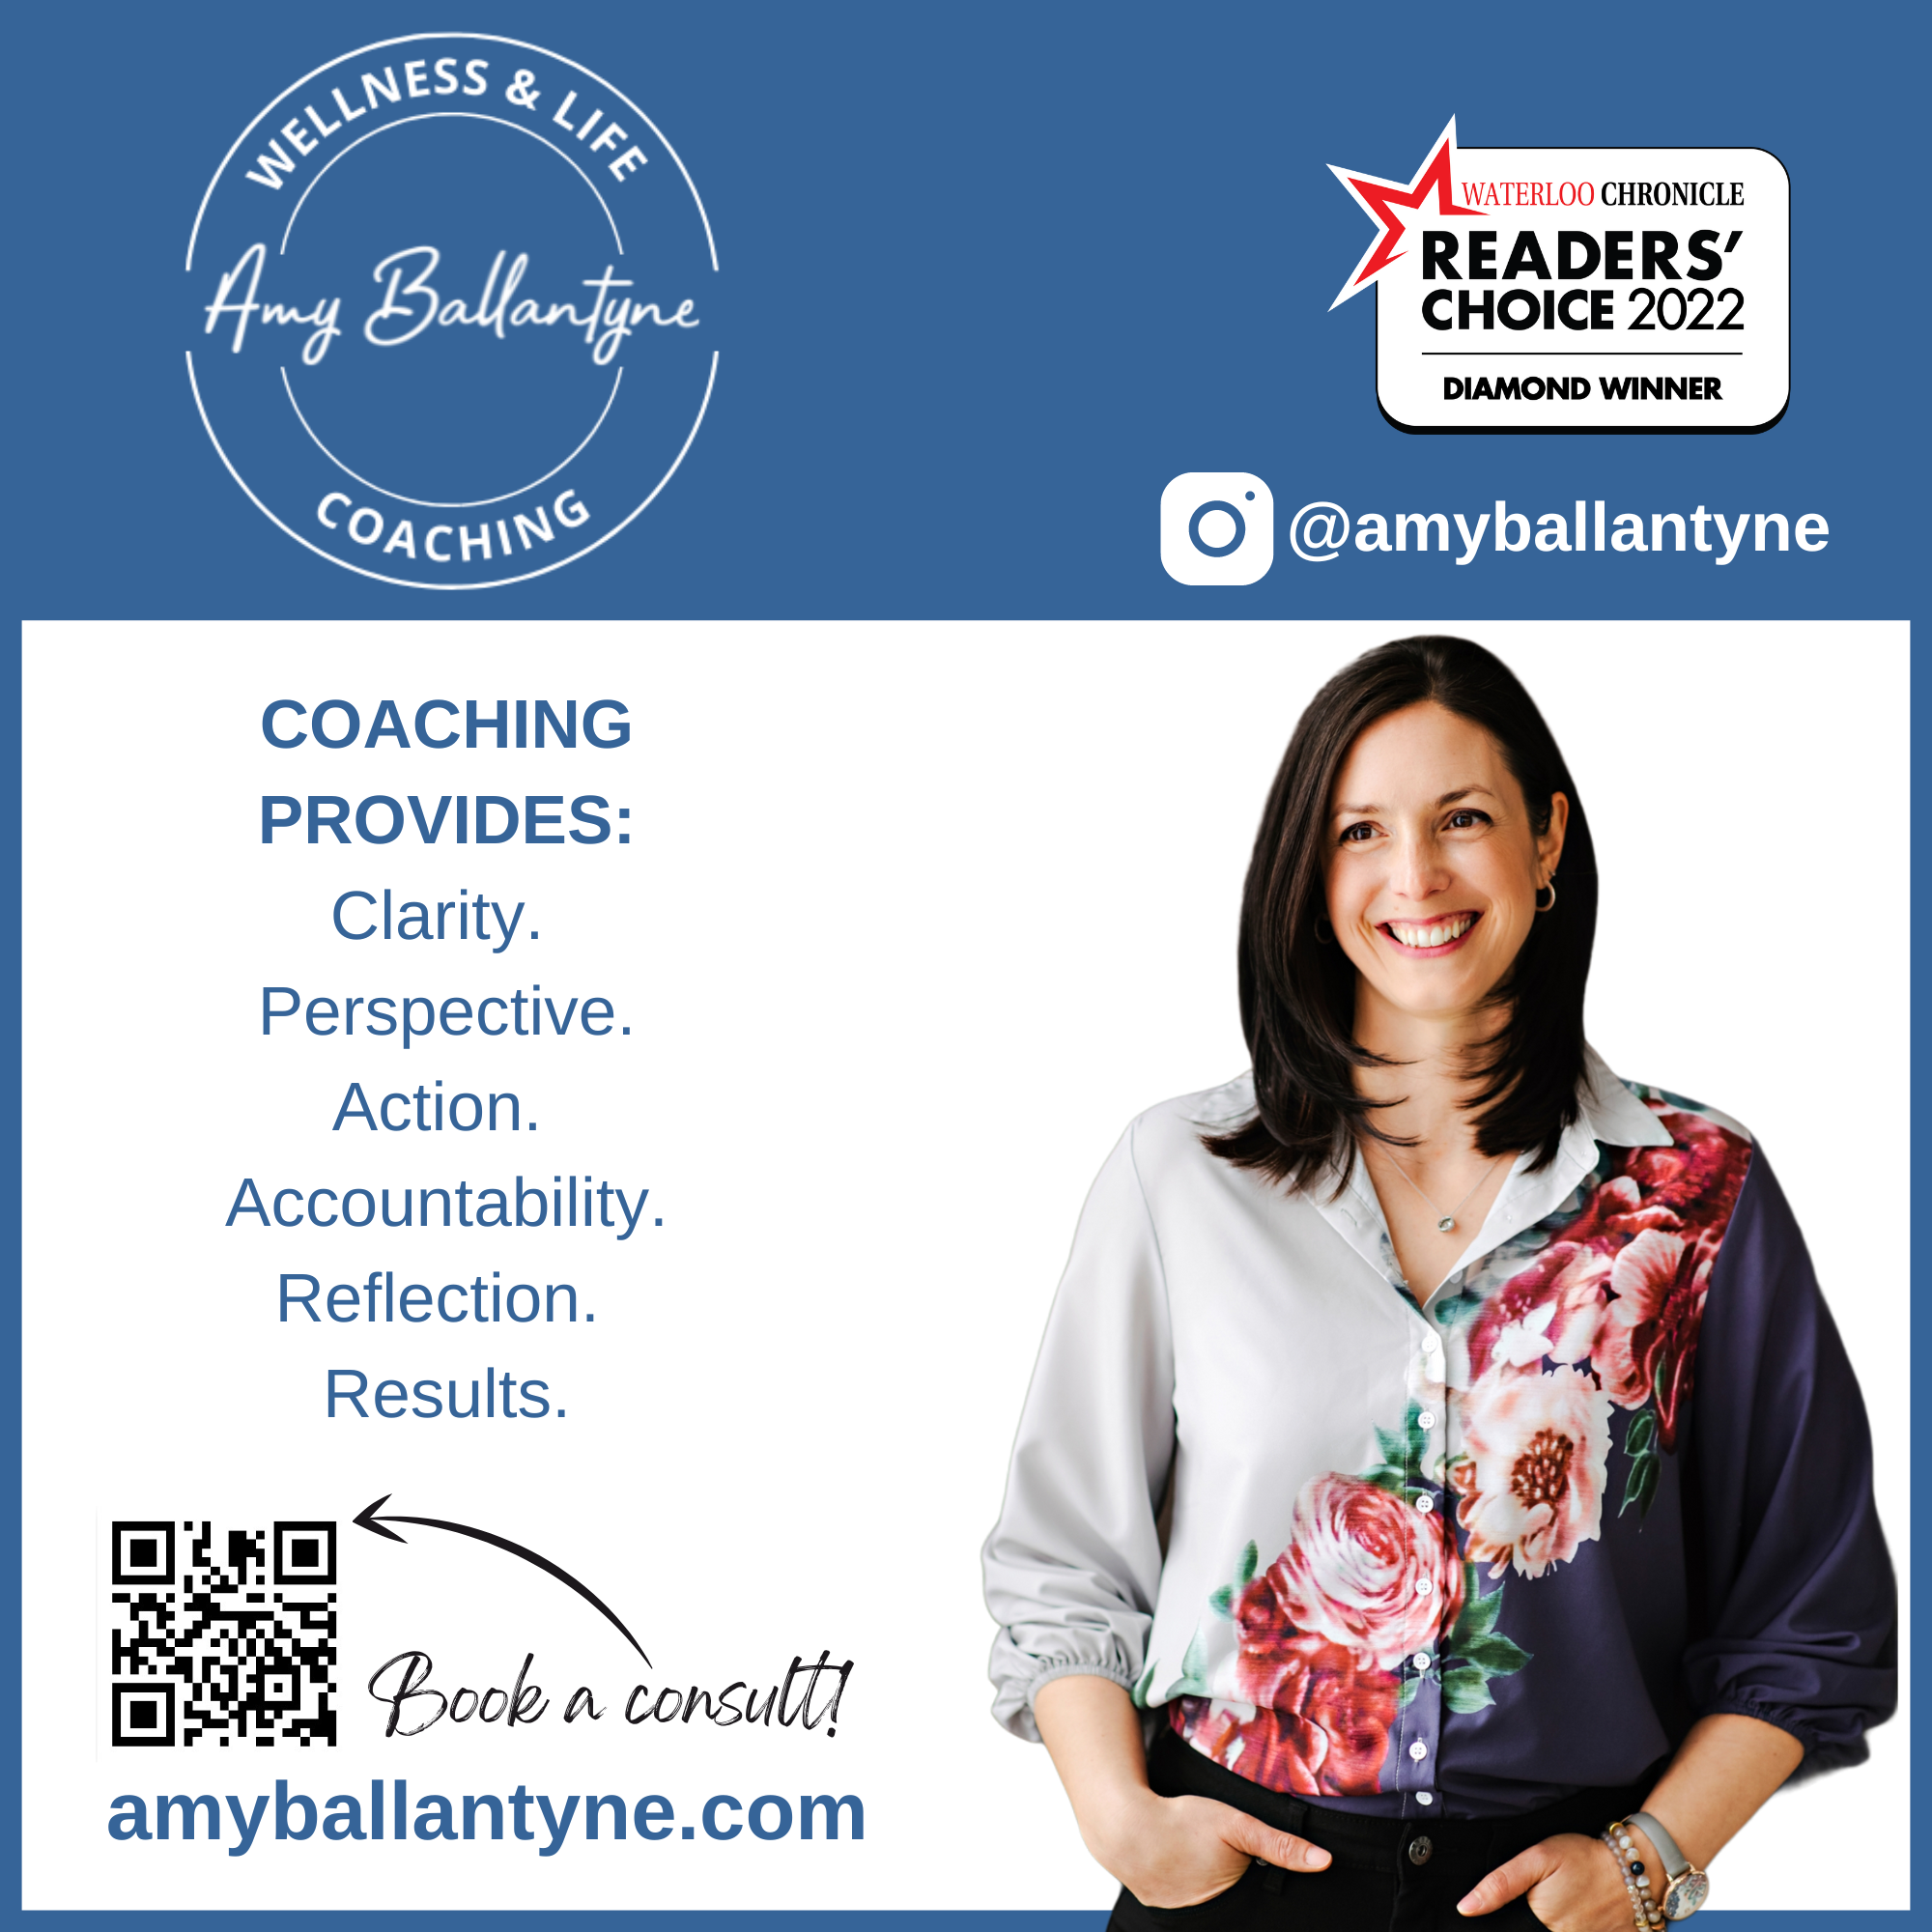 Amy Ballantyne - Wellness & Life Coach